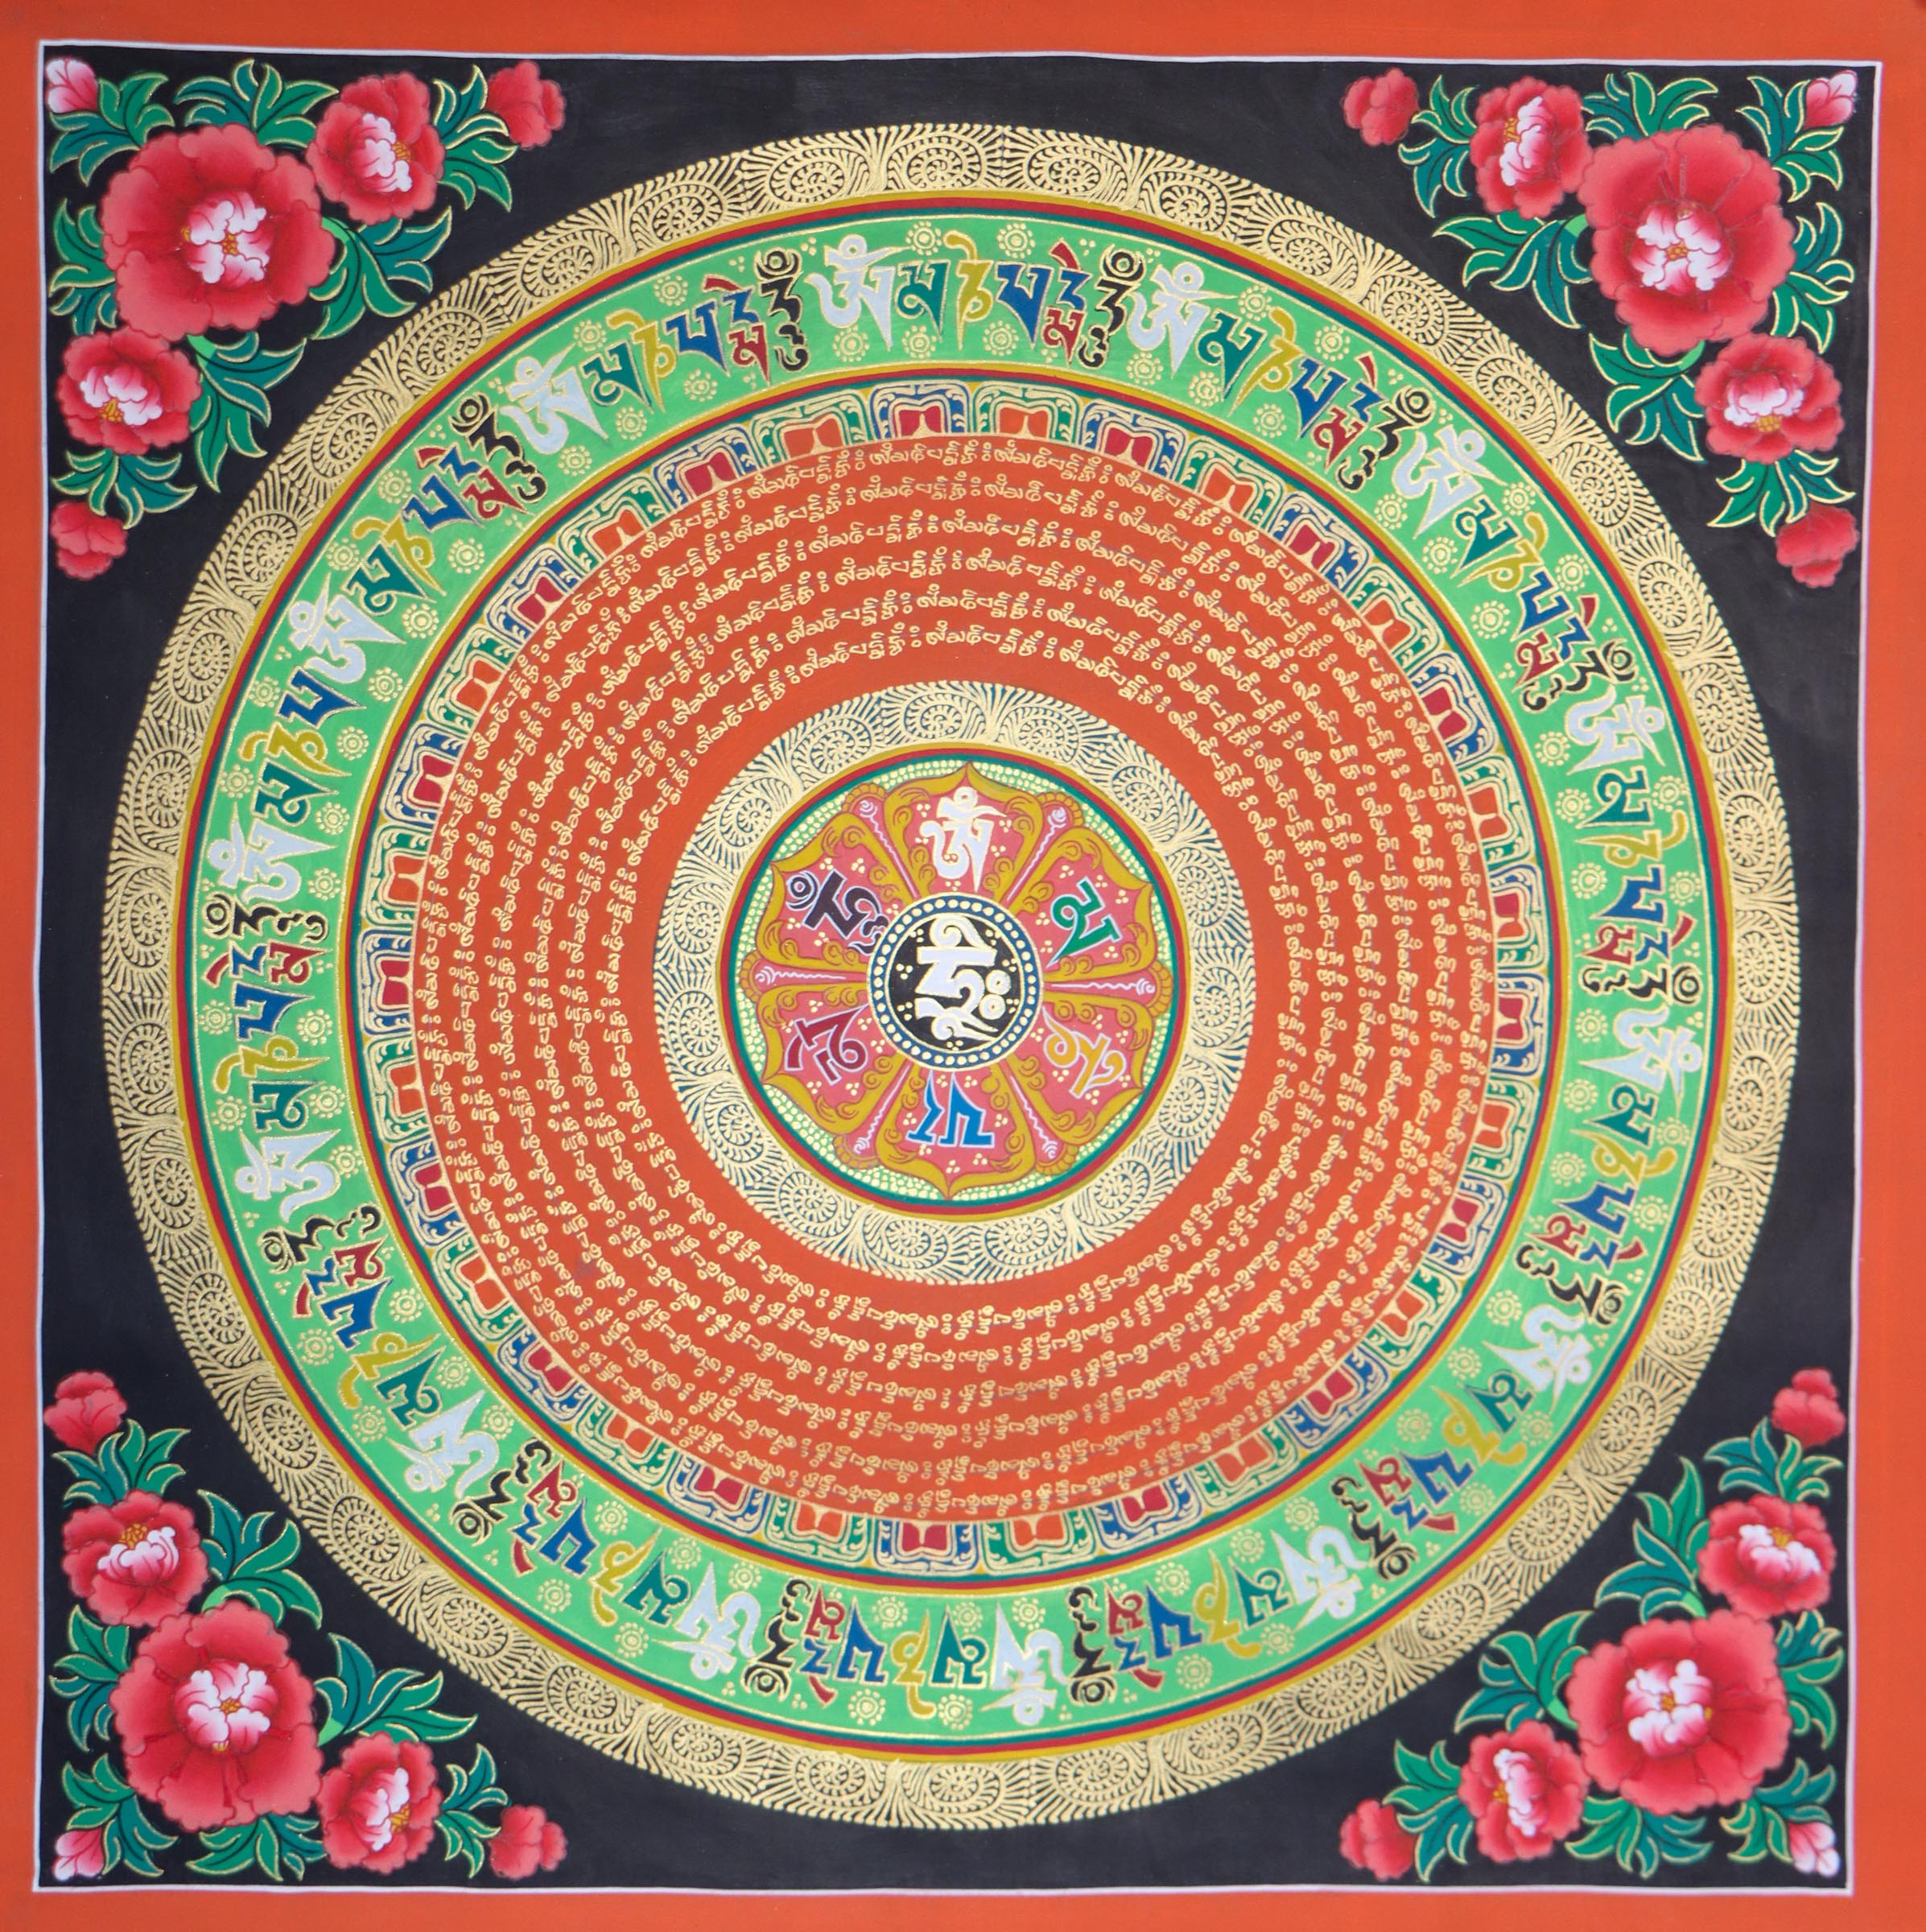 Black Mantra Mandala Thangka for positivity .